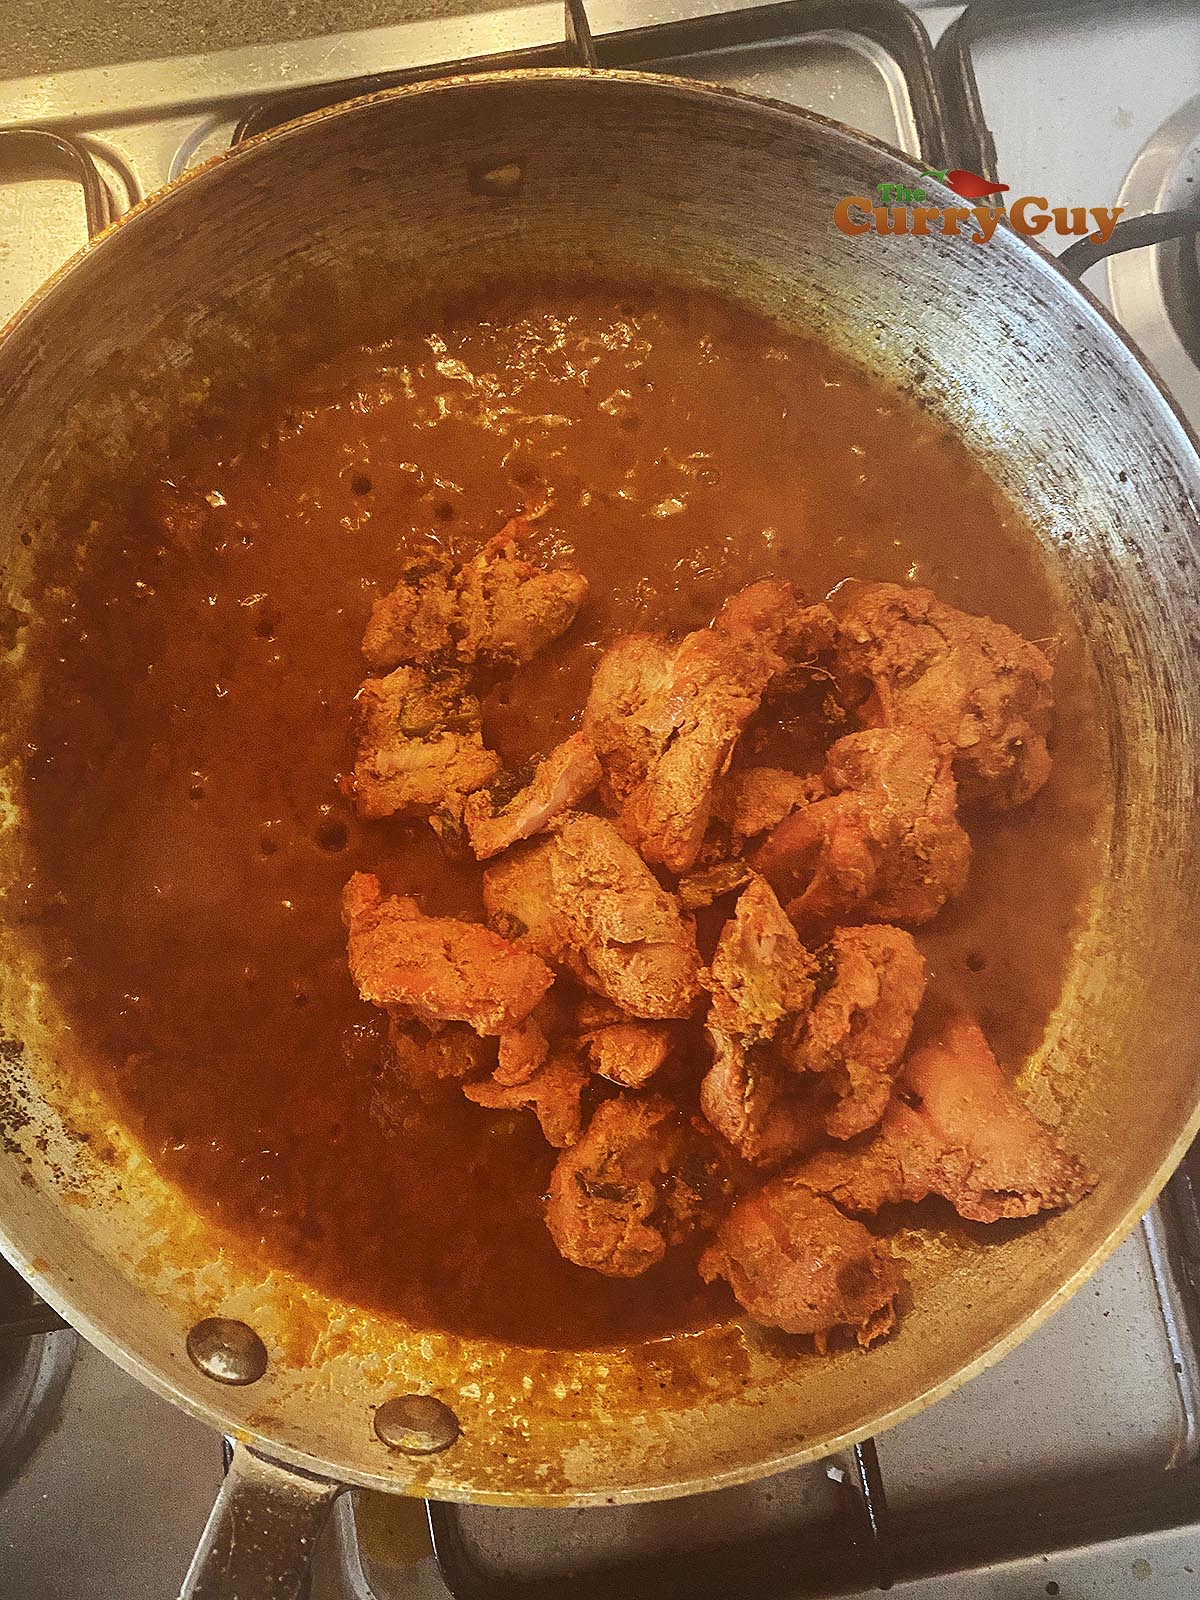 Adding tomato puree, base sauce and chicken